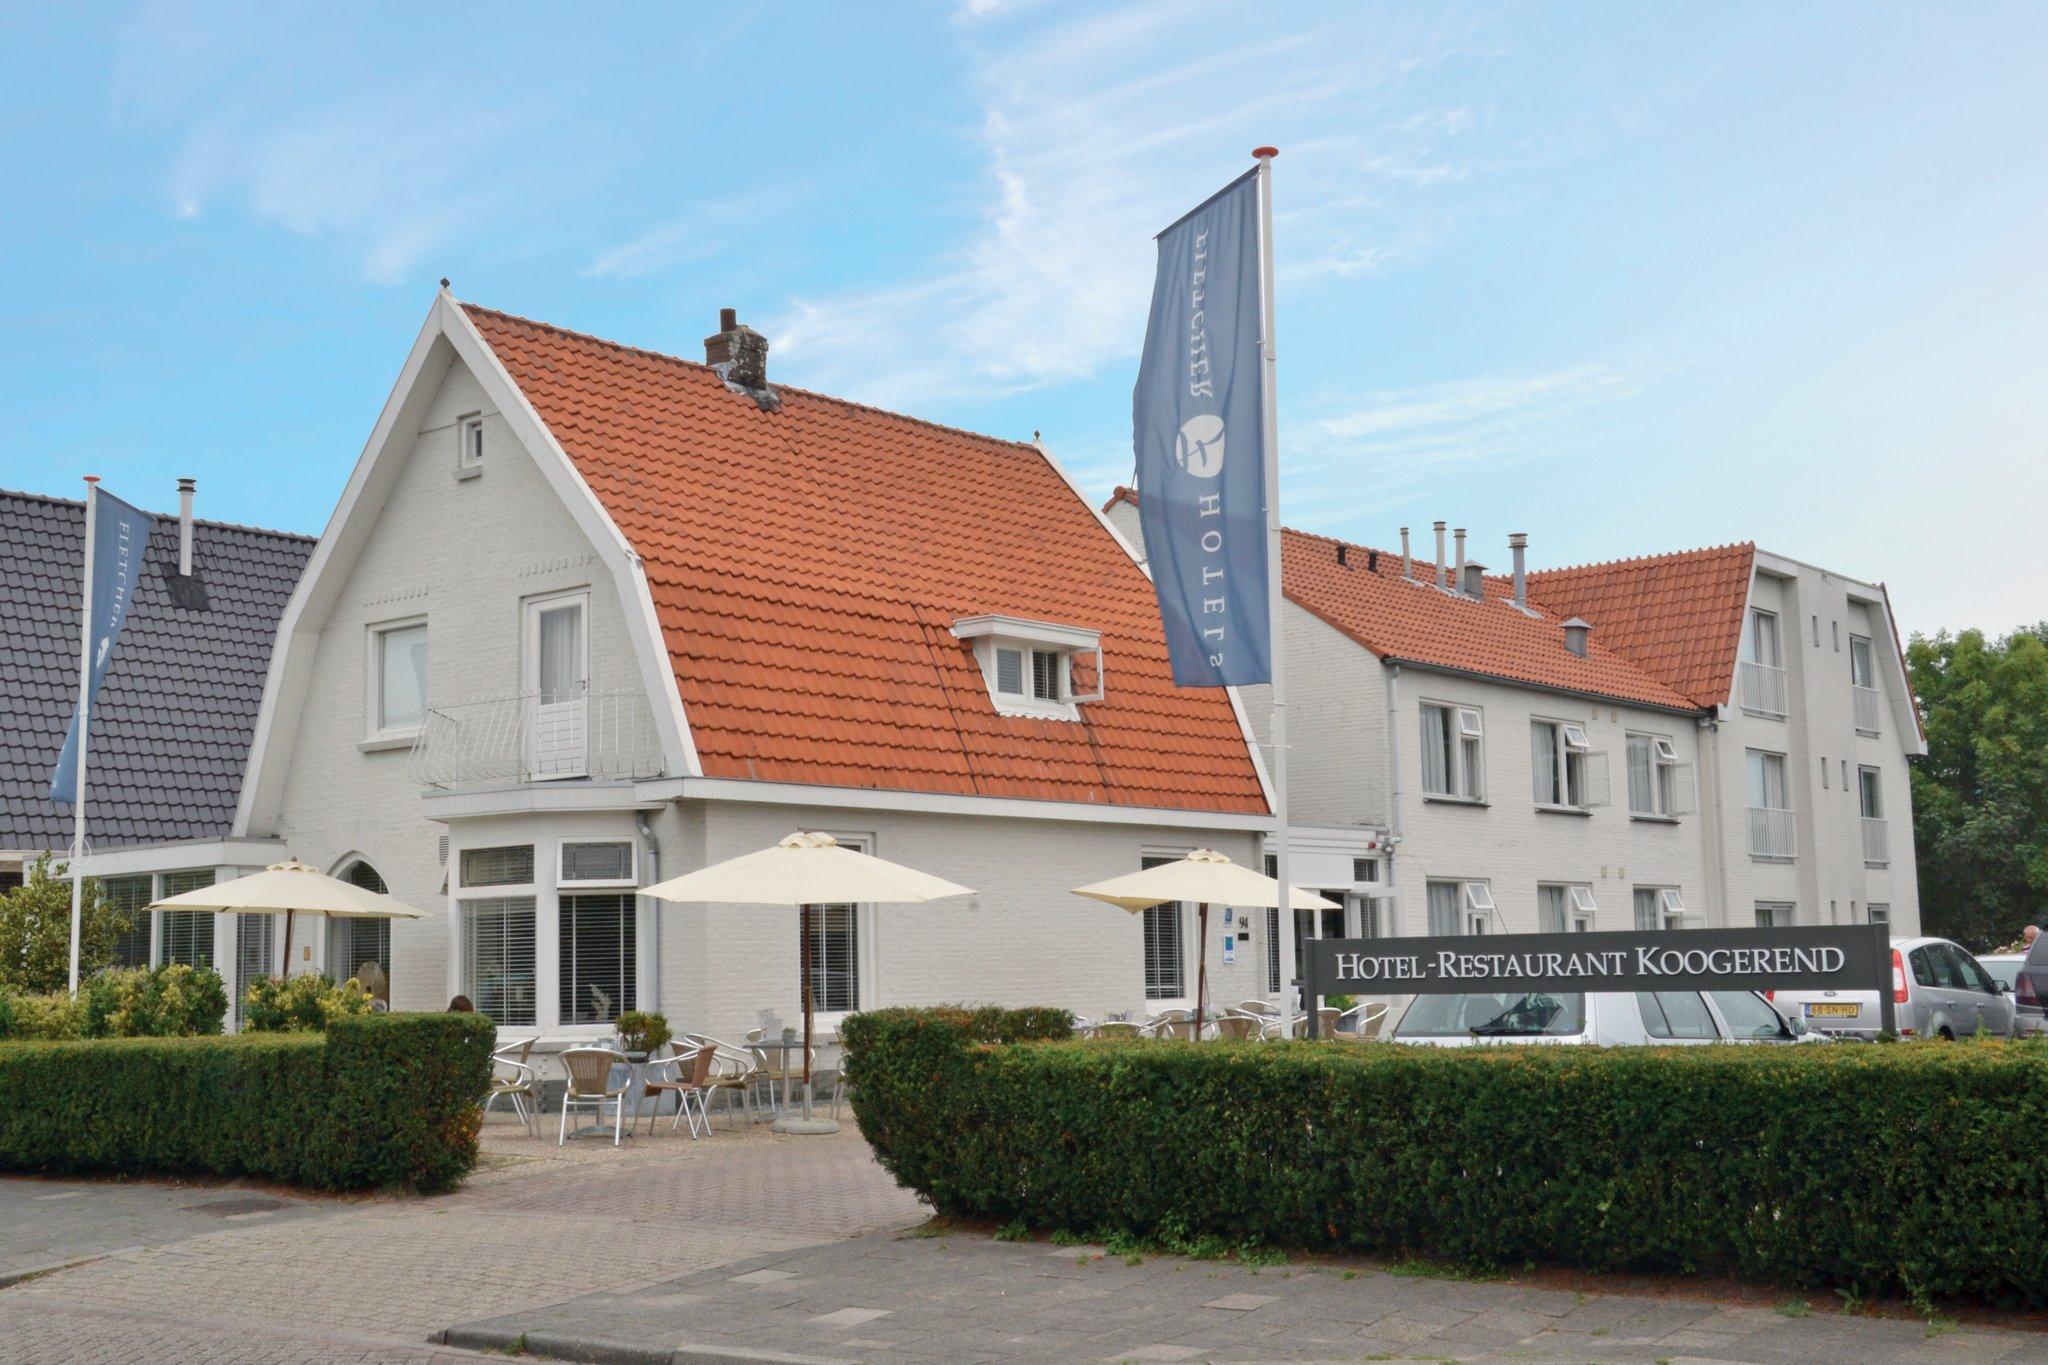 Hotel-Restaurant Koogerend in Den Burg, NL